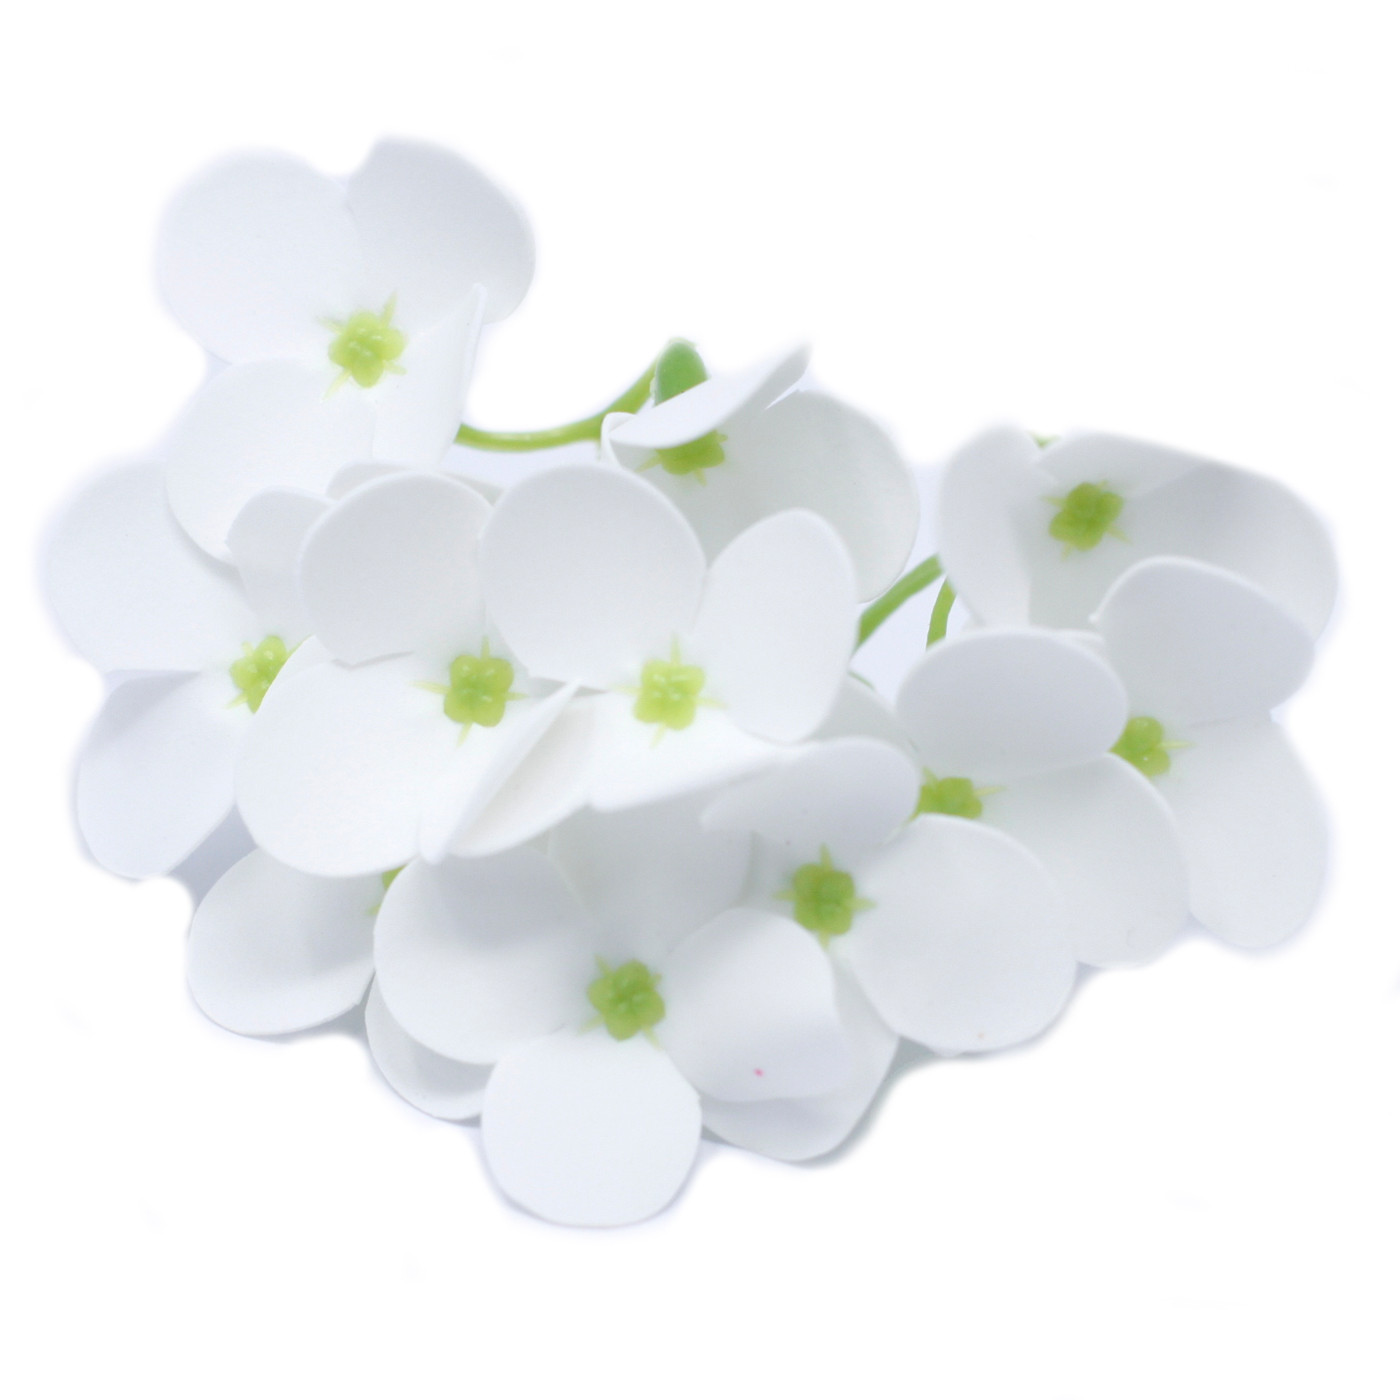 10 x Craft Soap Flowers - Hyacinth Bean - White